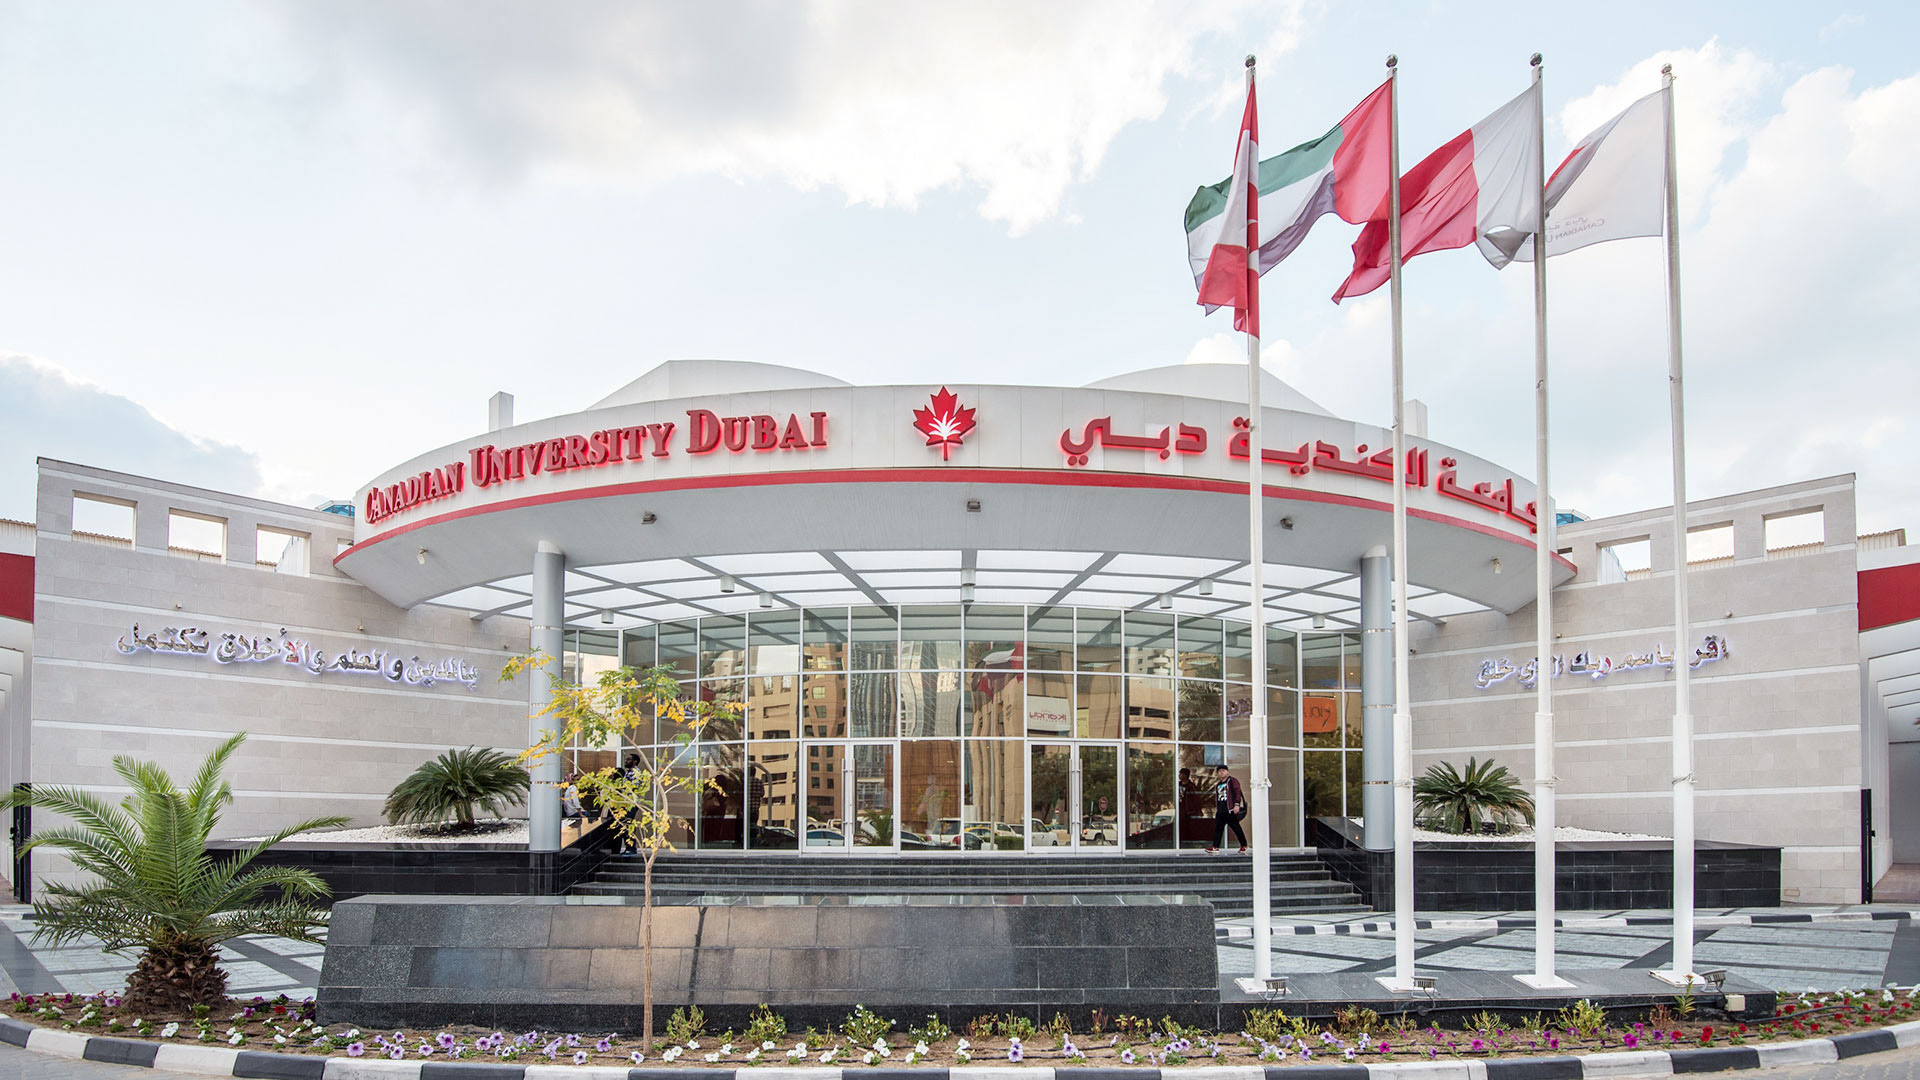 canadian university of duba featured